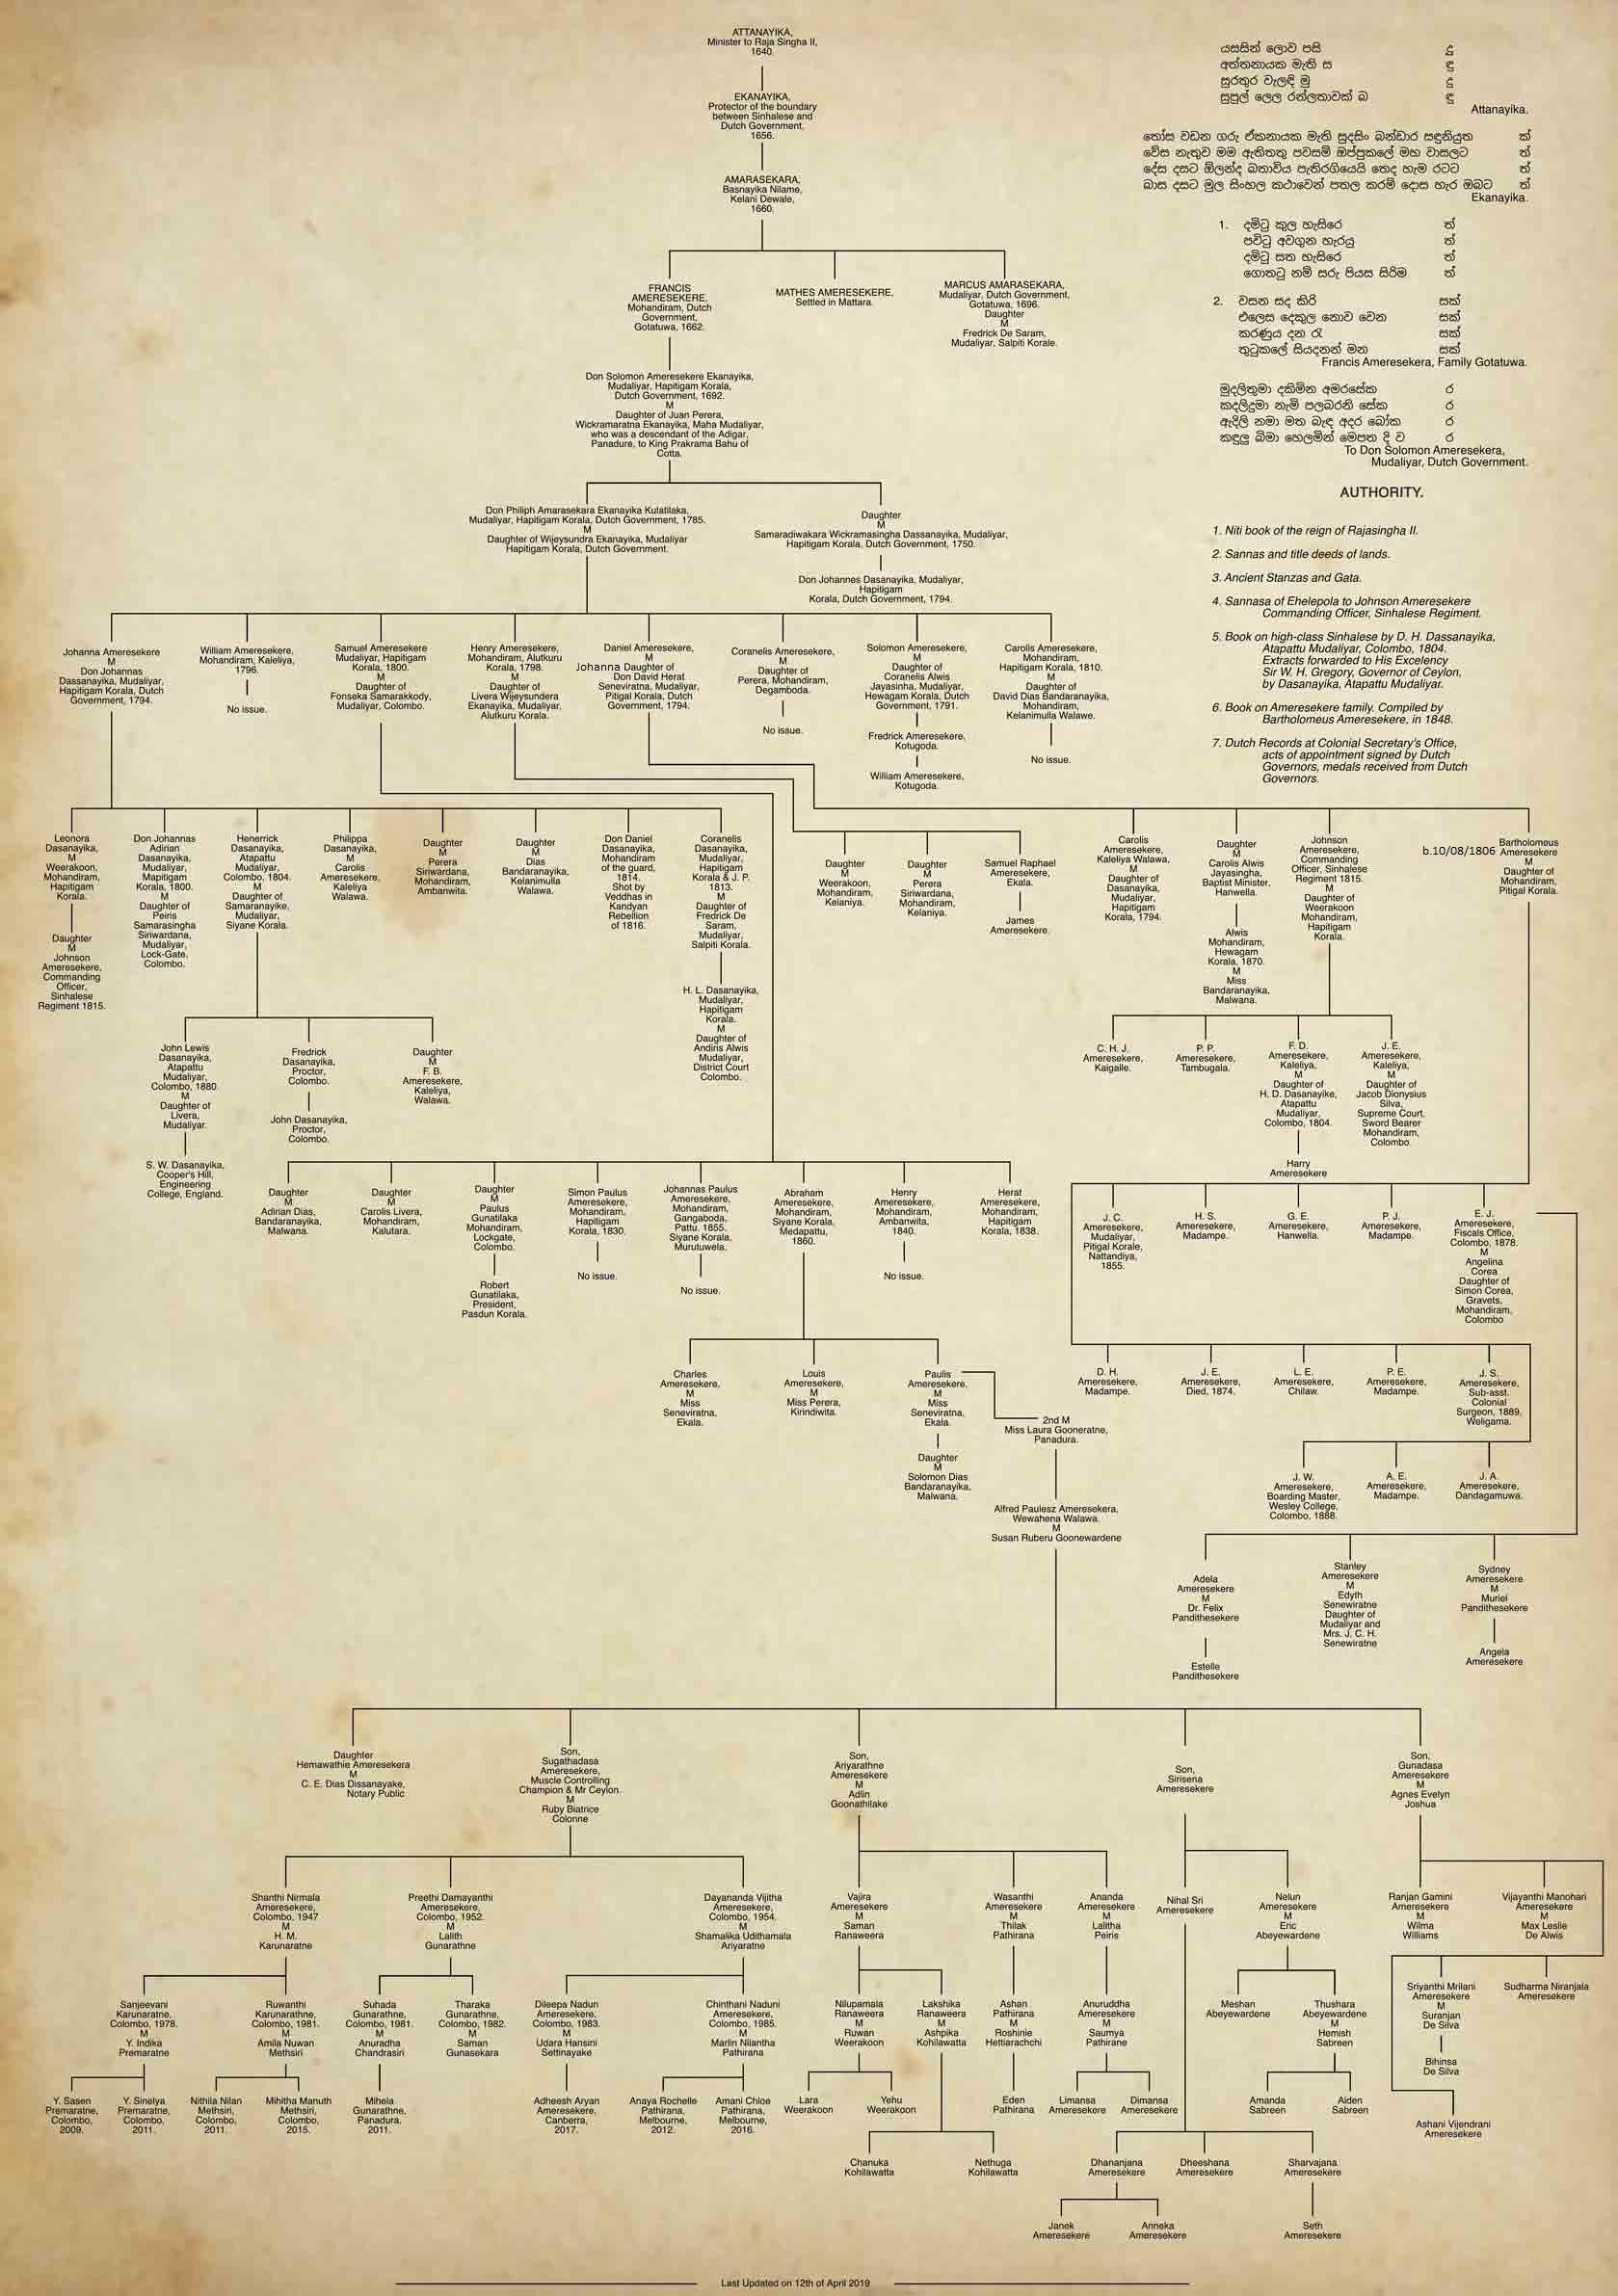 Amarasekara Family tree going back to 1640